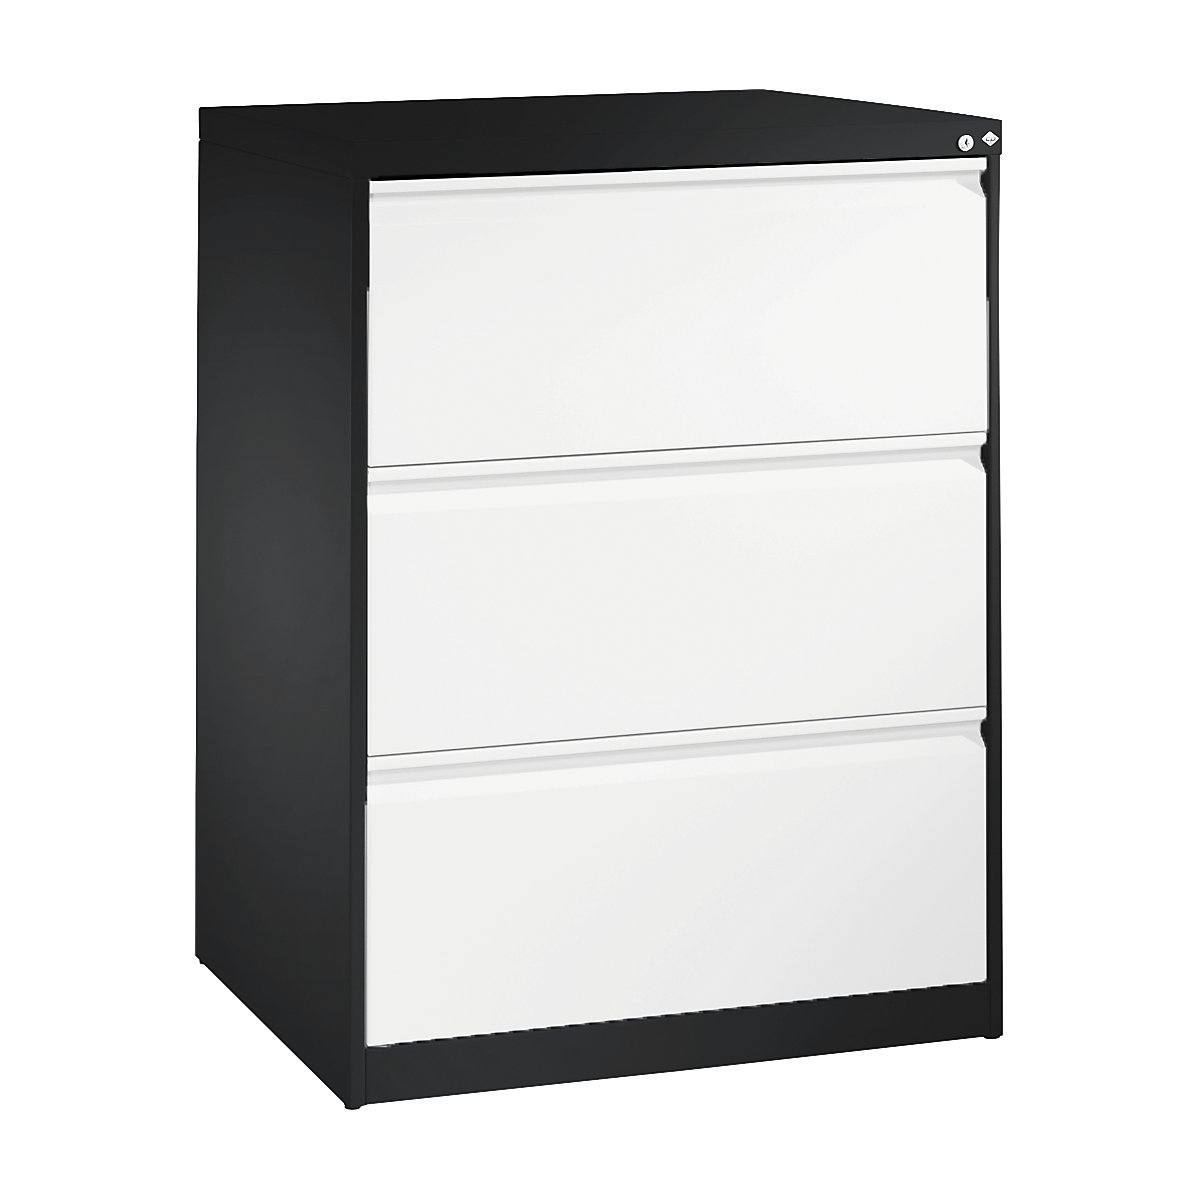 C+P – ACURADO index card cabinet, 2 track, 3 drawers, black grey / traffic white